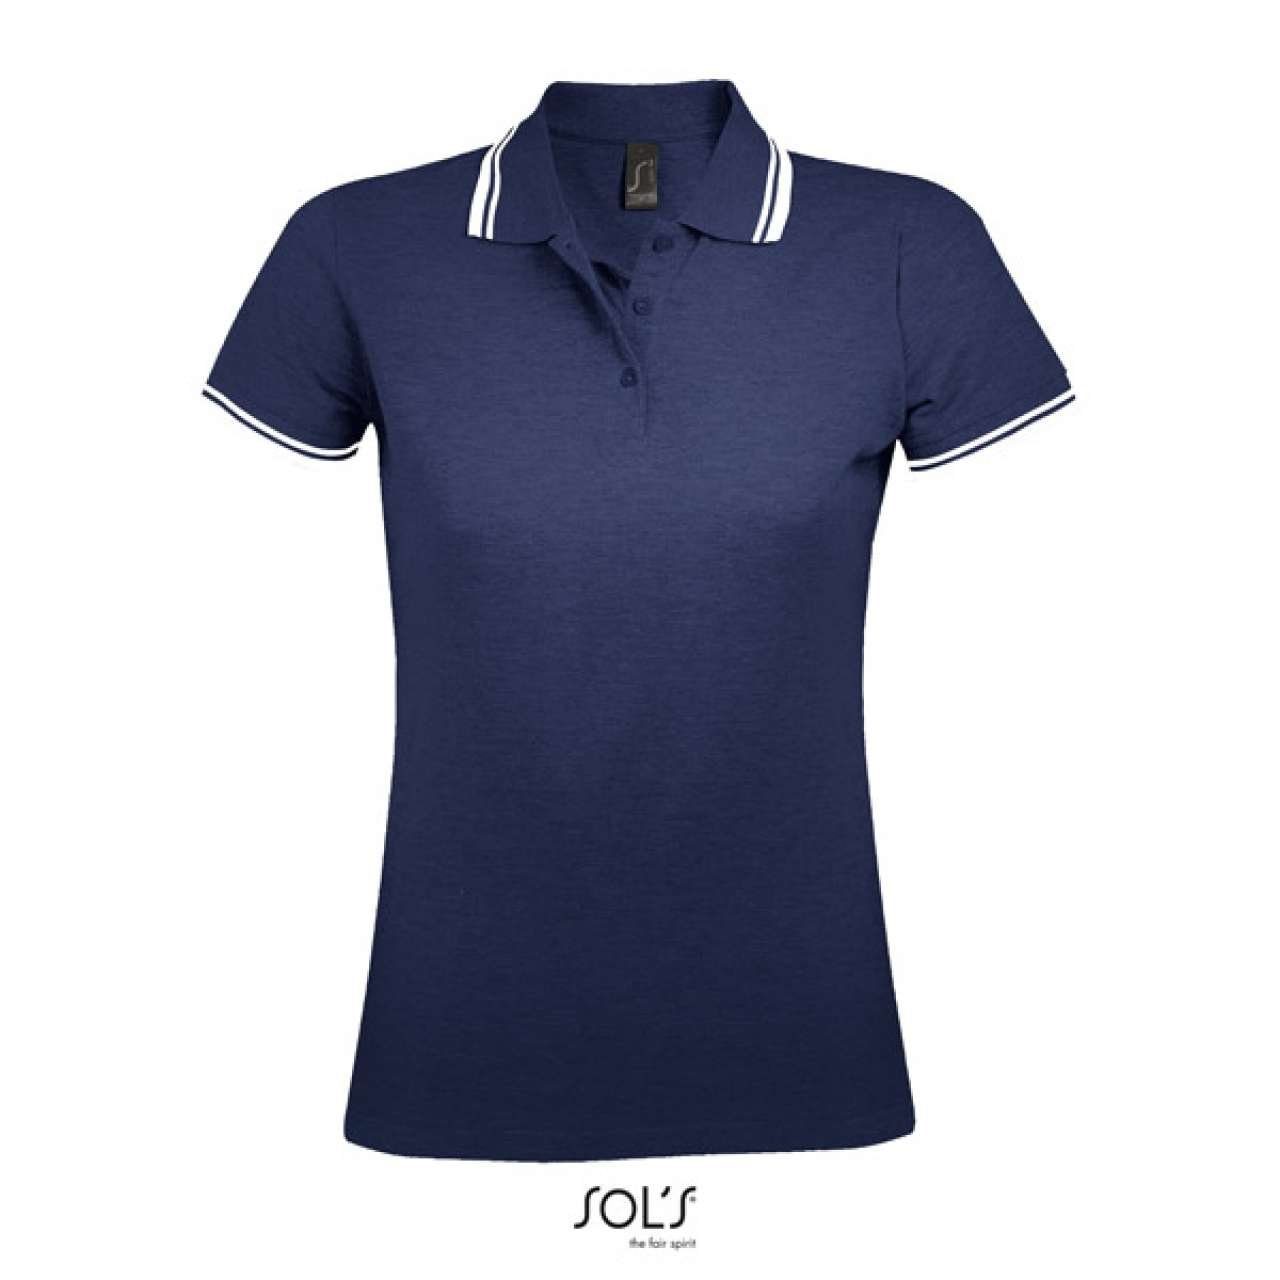 SOLS Poloshirt SOL'S Damen Polohemd Polo Navy/White Poloshirt kurzarm Lady-Fit Oberteil, French Shirt Piqué T-Shirt